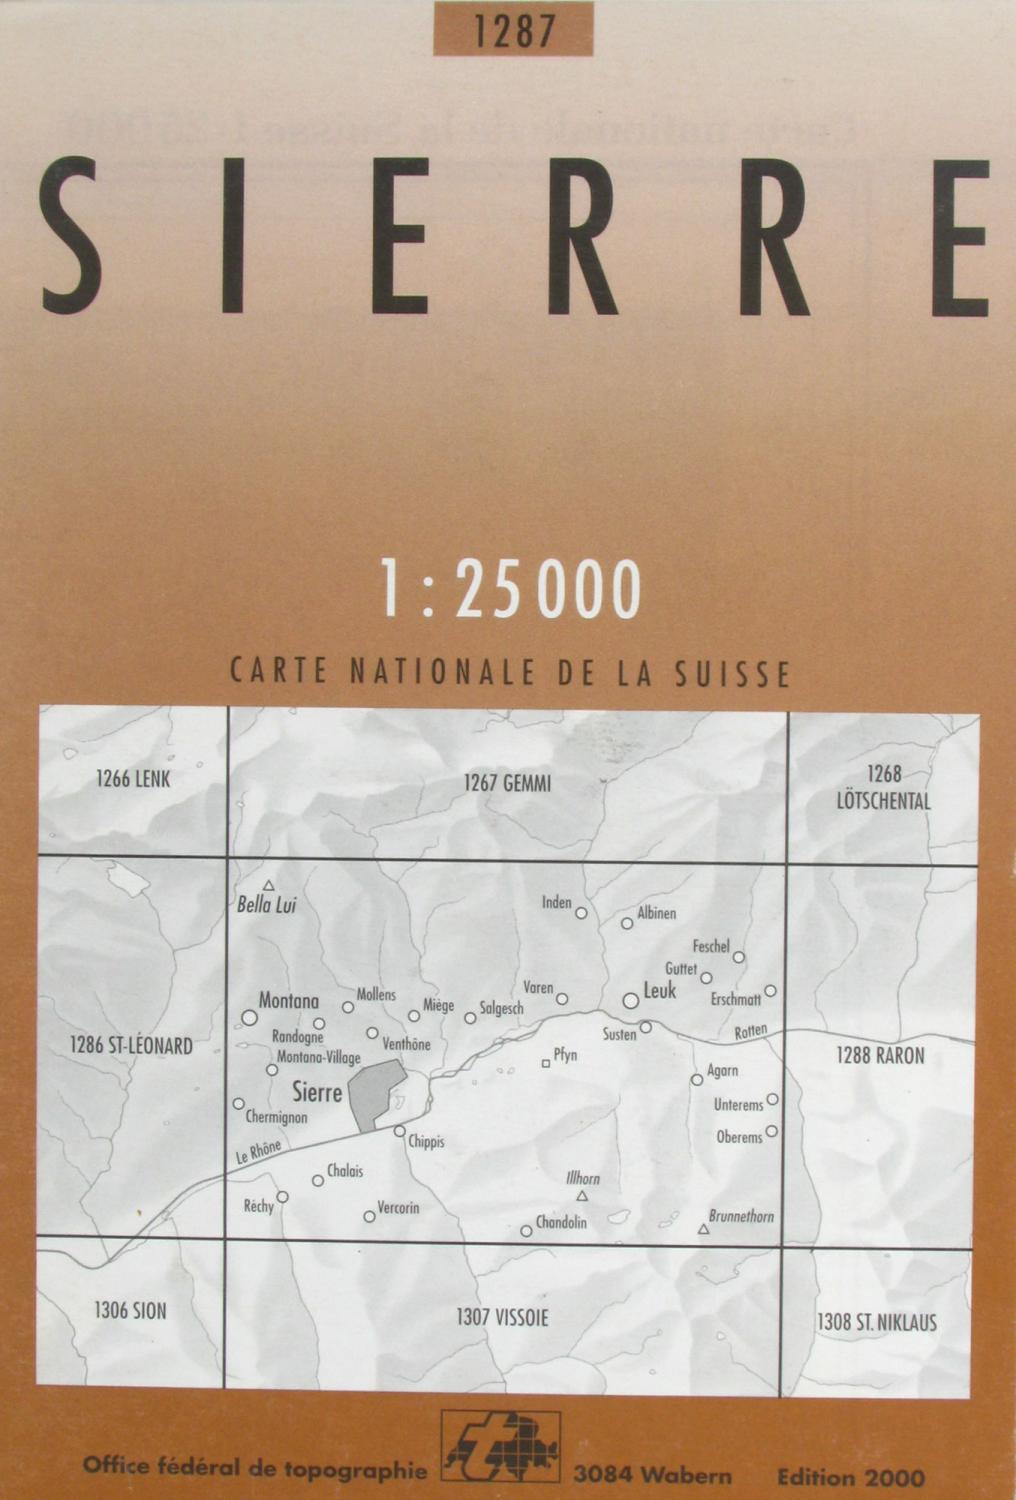 Carte Nationale de la Suisse. Sierre (Blatt 1287),